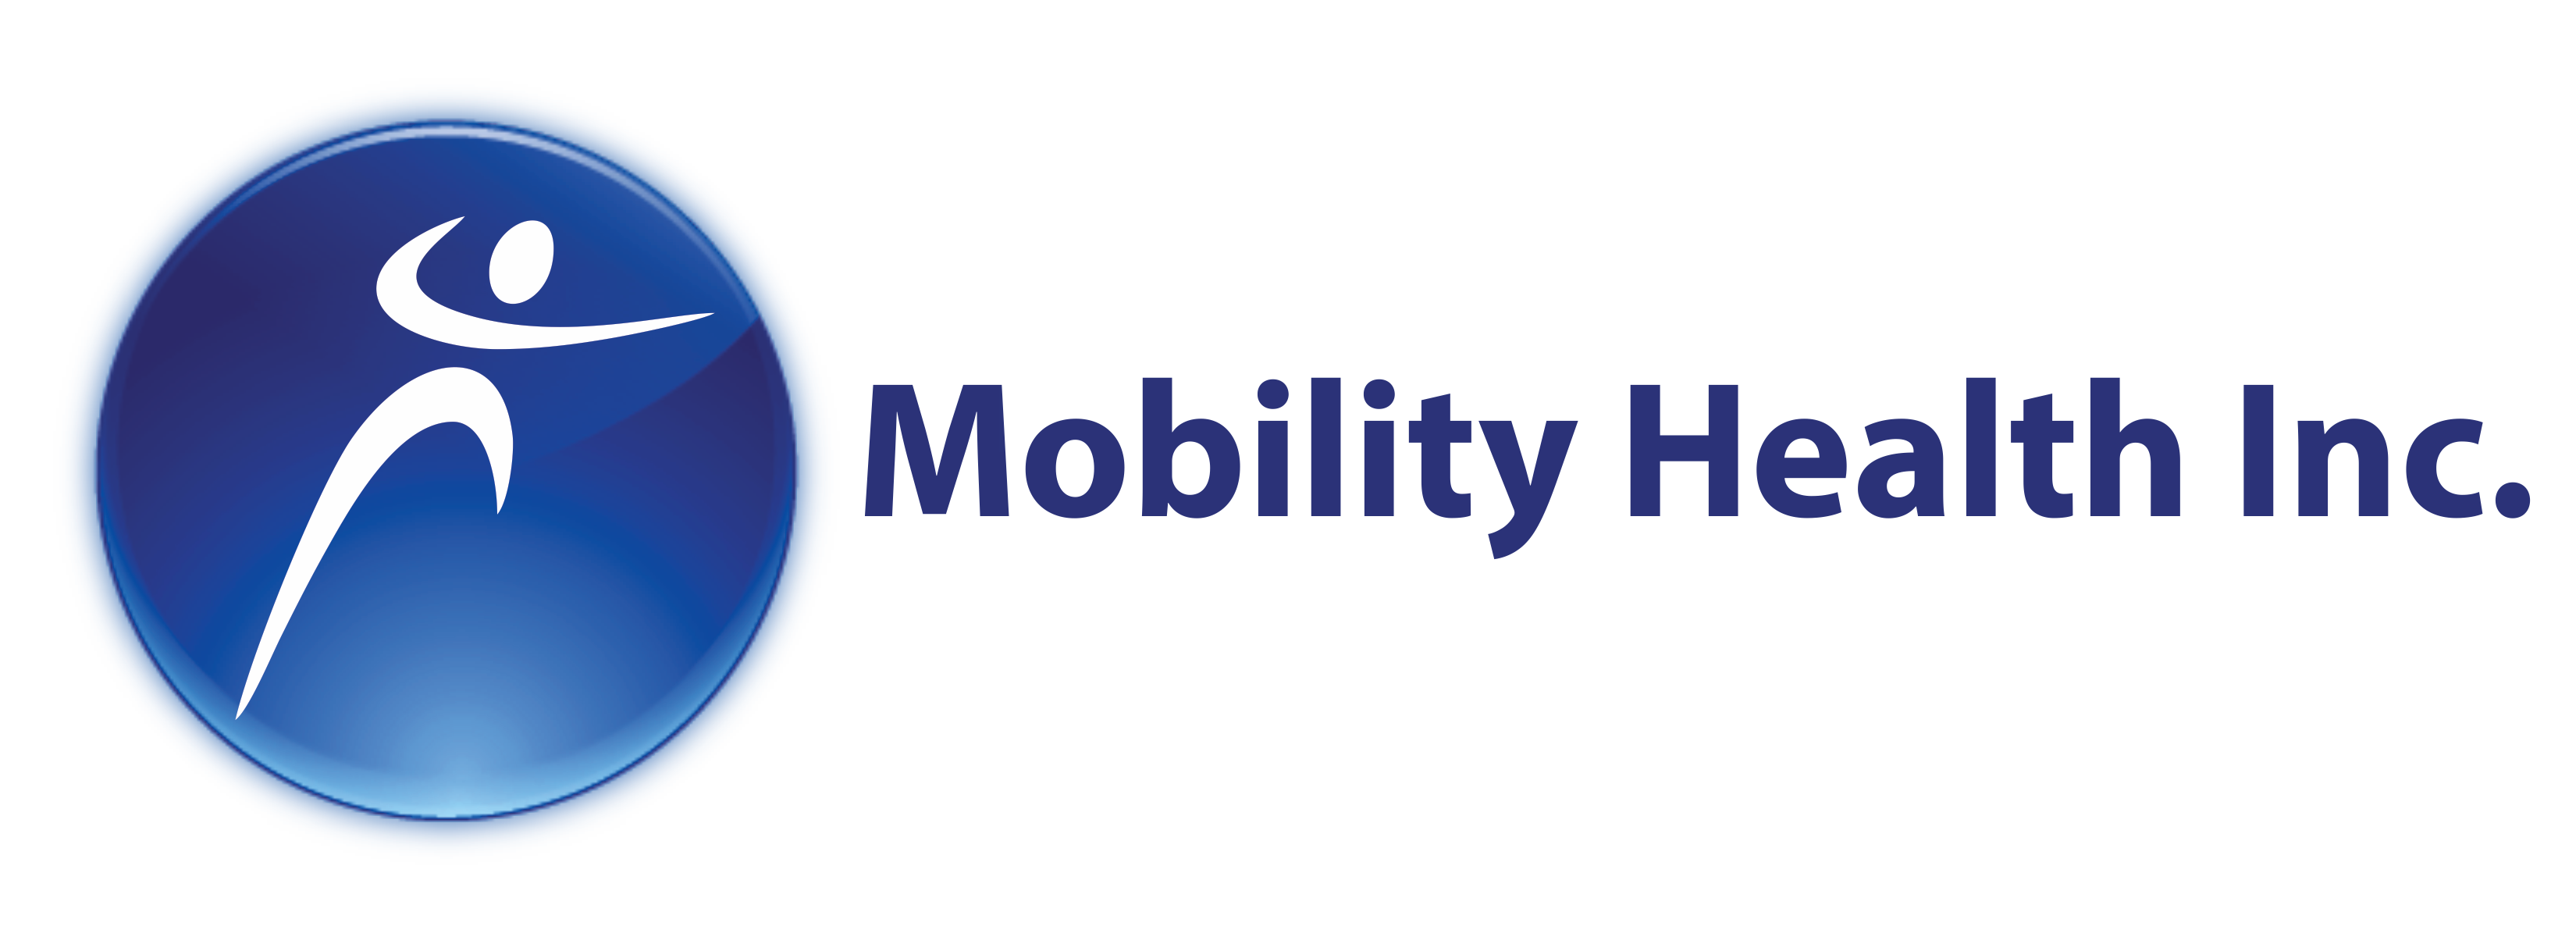 Mobility Health Inc.